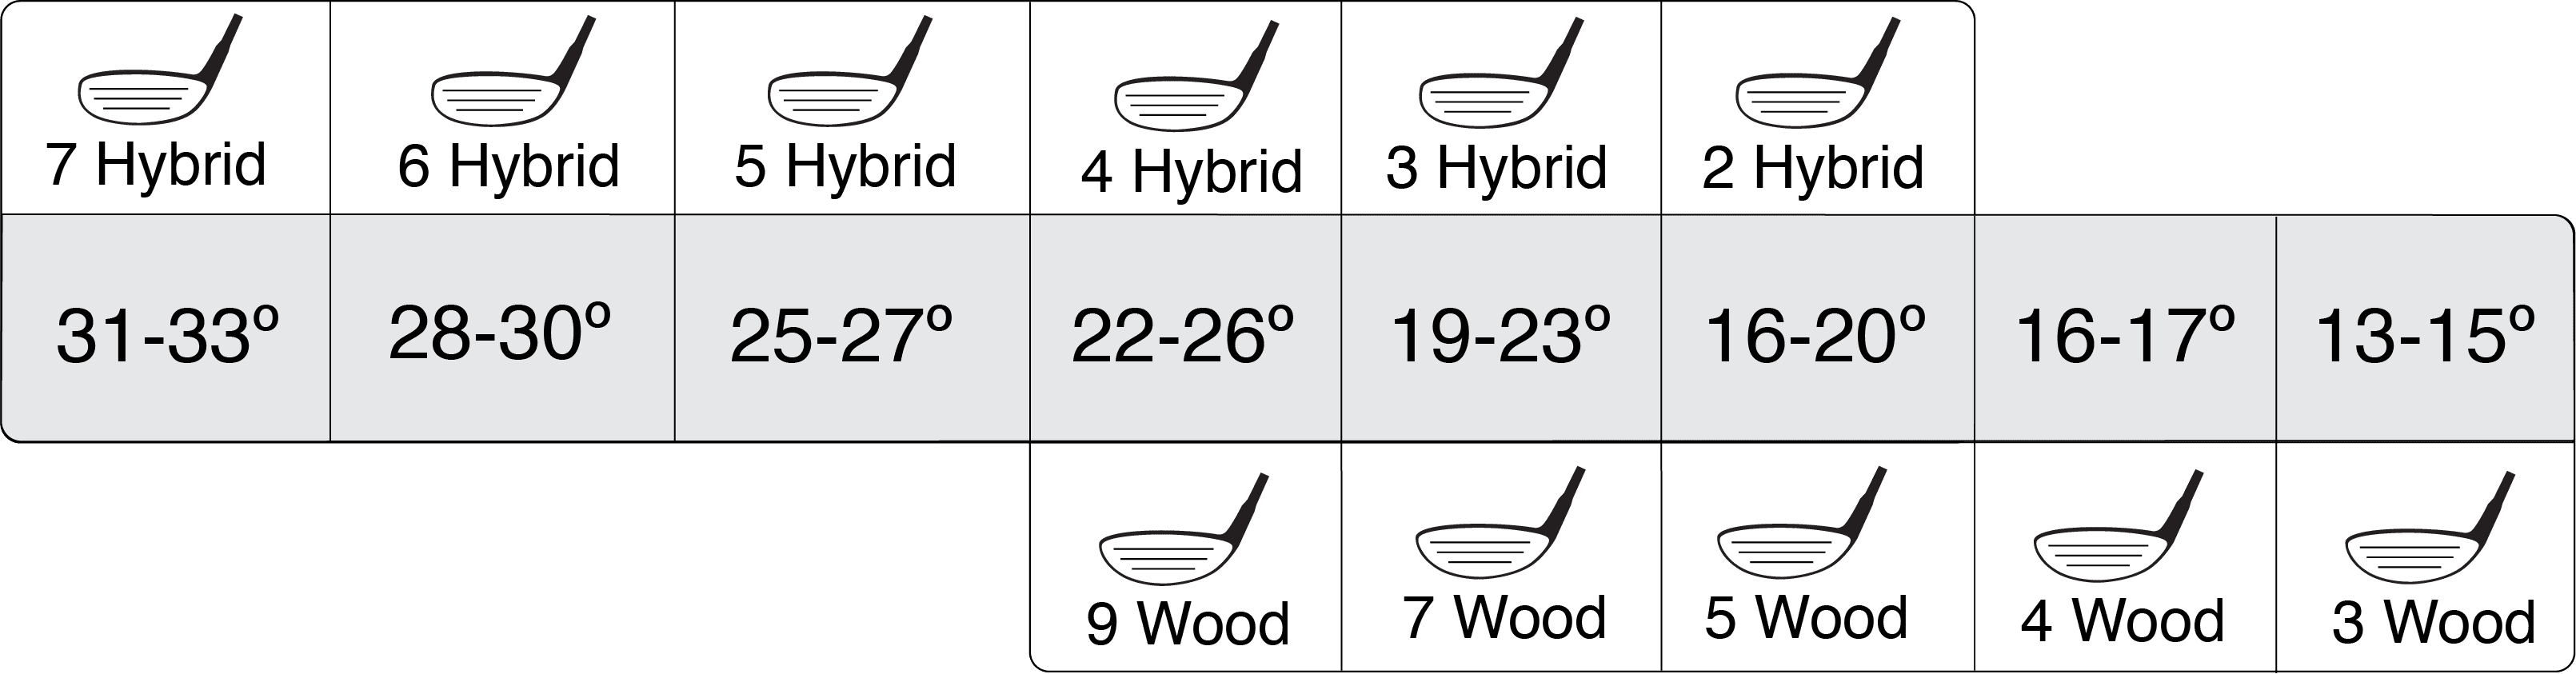 Golf Club Degrees Of Loft Chart